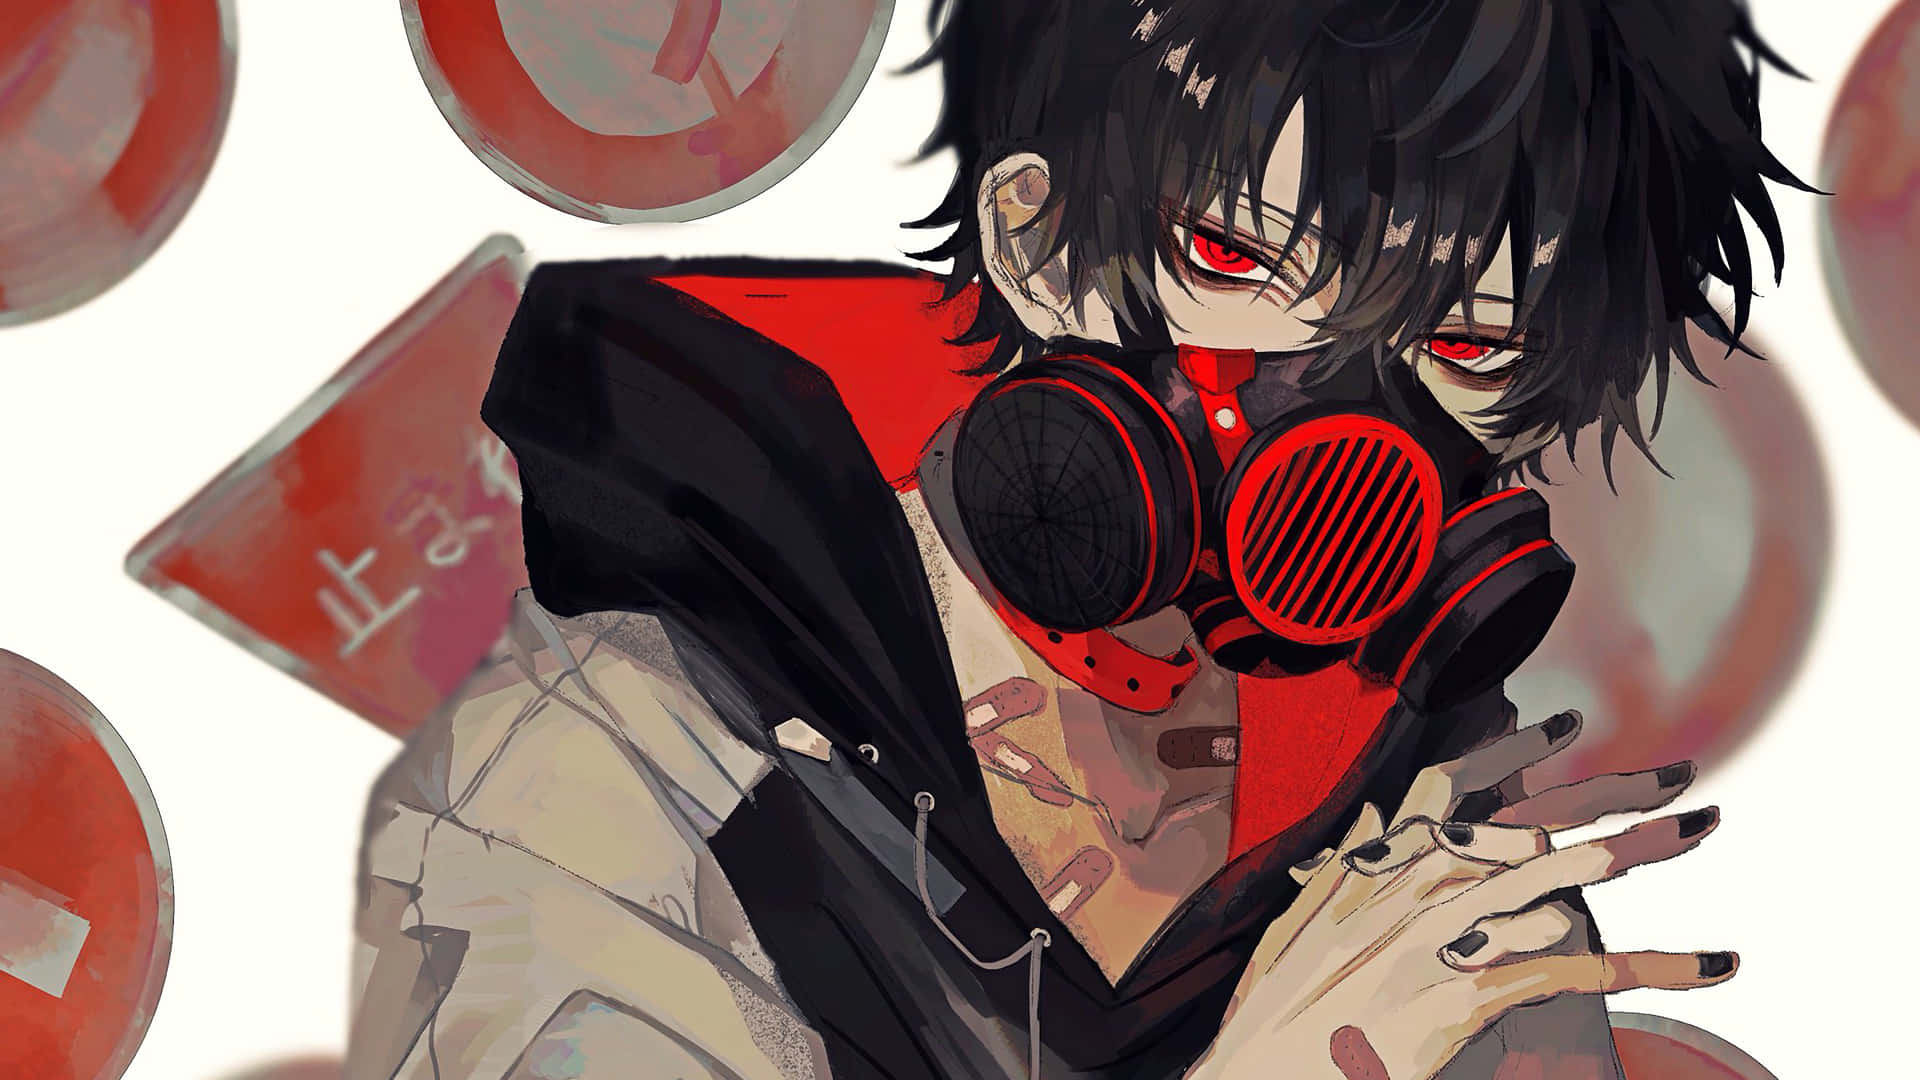 Hot Gas Mask Boy Anime Red&Black Wallpaper